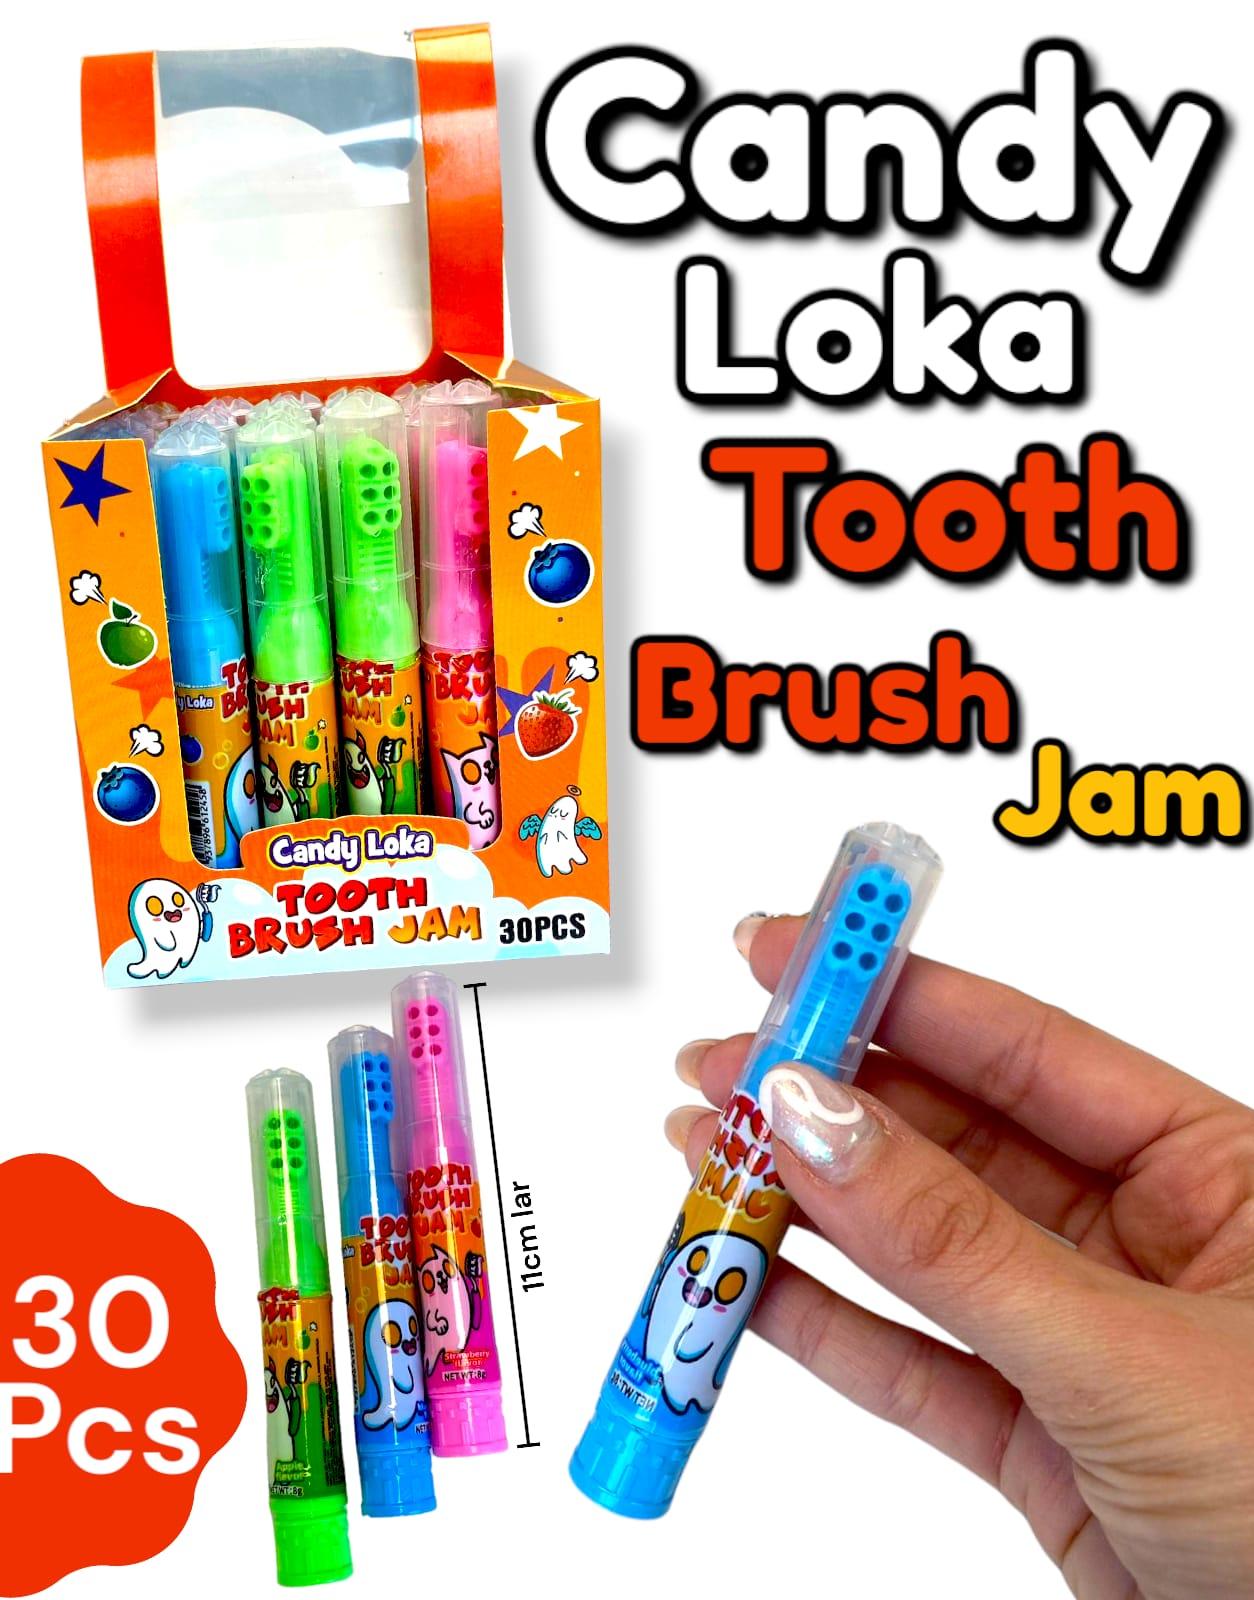 Candy Loka Tooth Brush Jam 